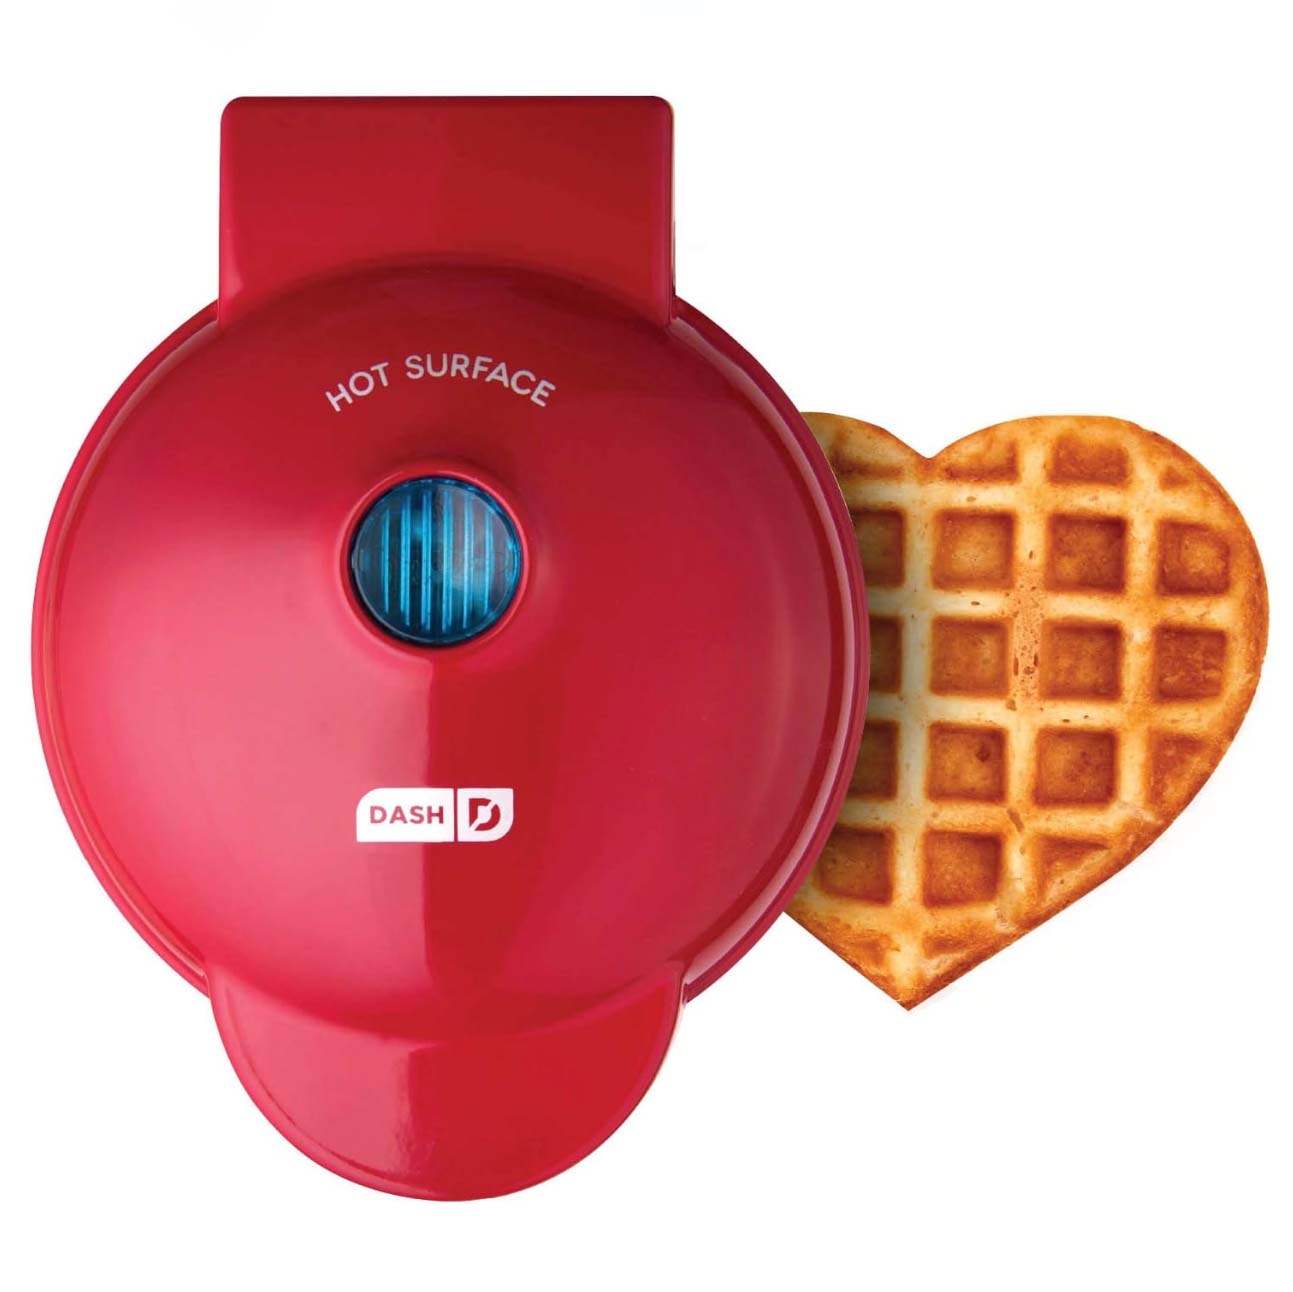 Red waffle maker and heart-shaped waffle